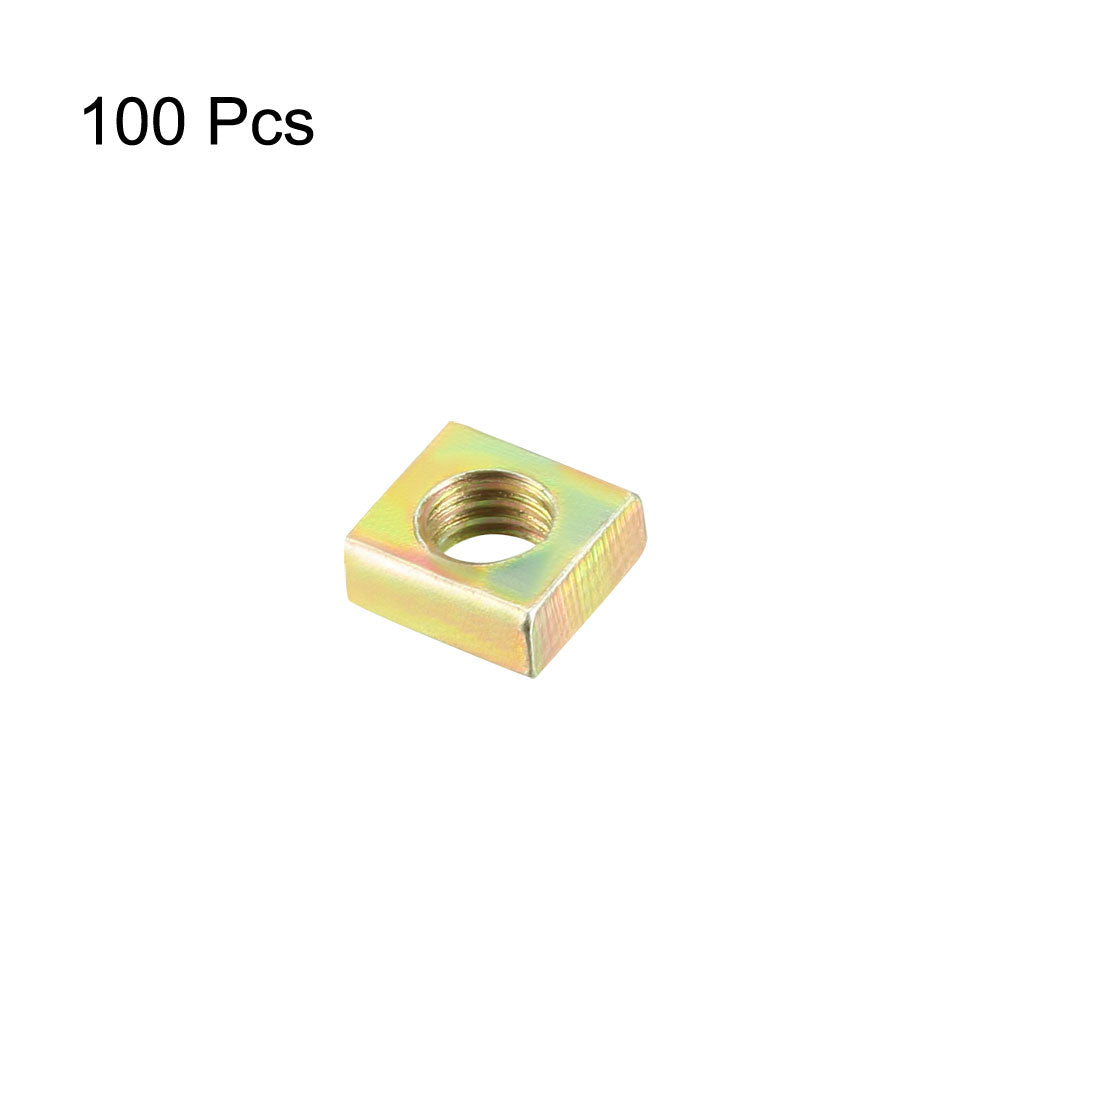 uxcell Uxcell Square Nuts, M5x8mmx3mm Yellow Zinc Plated Metric Coarse Thread Assortment Kit, 100 Pcs